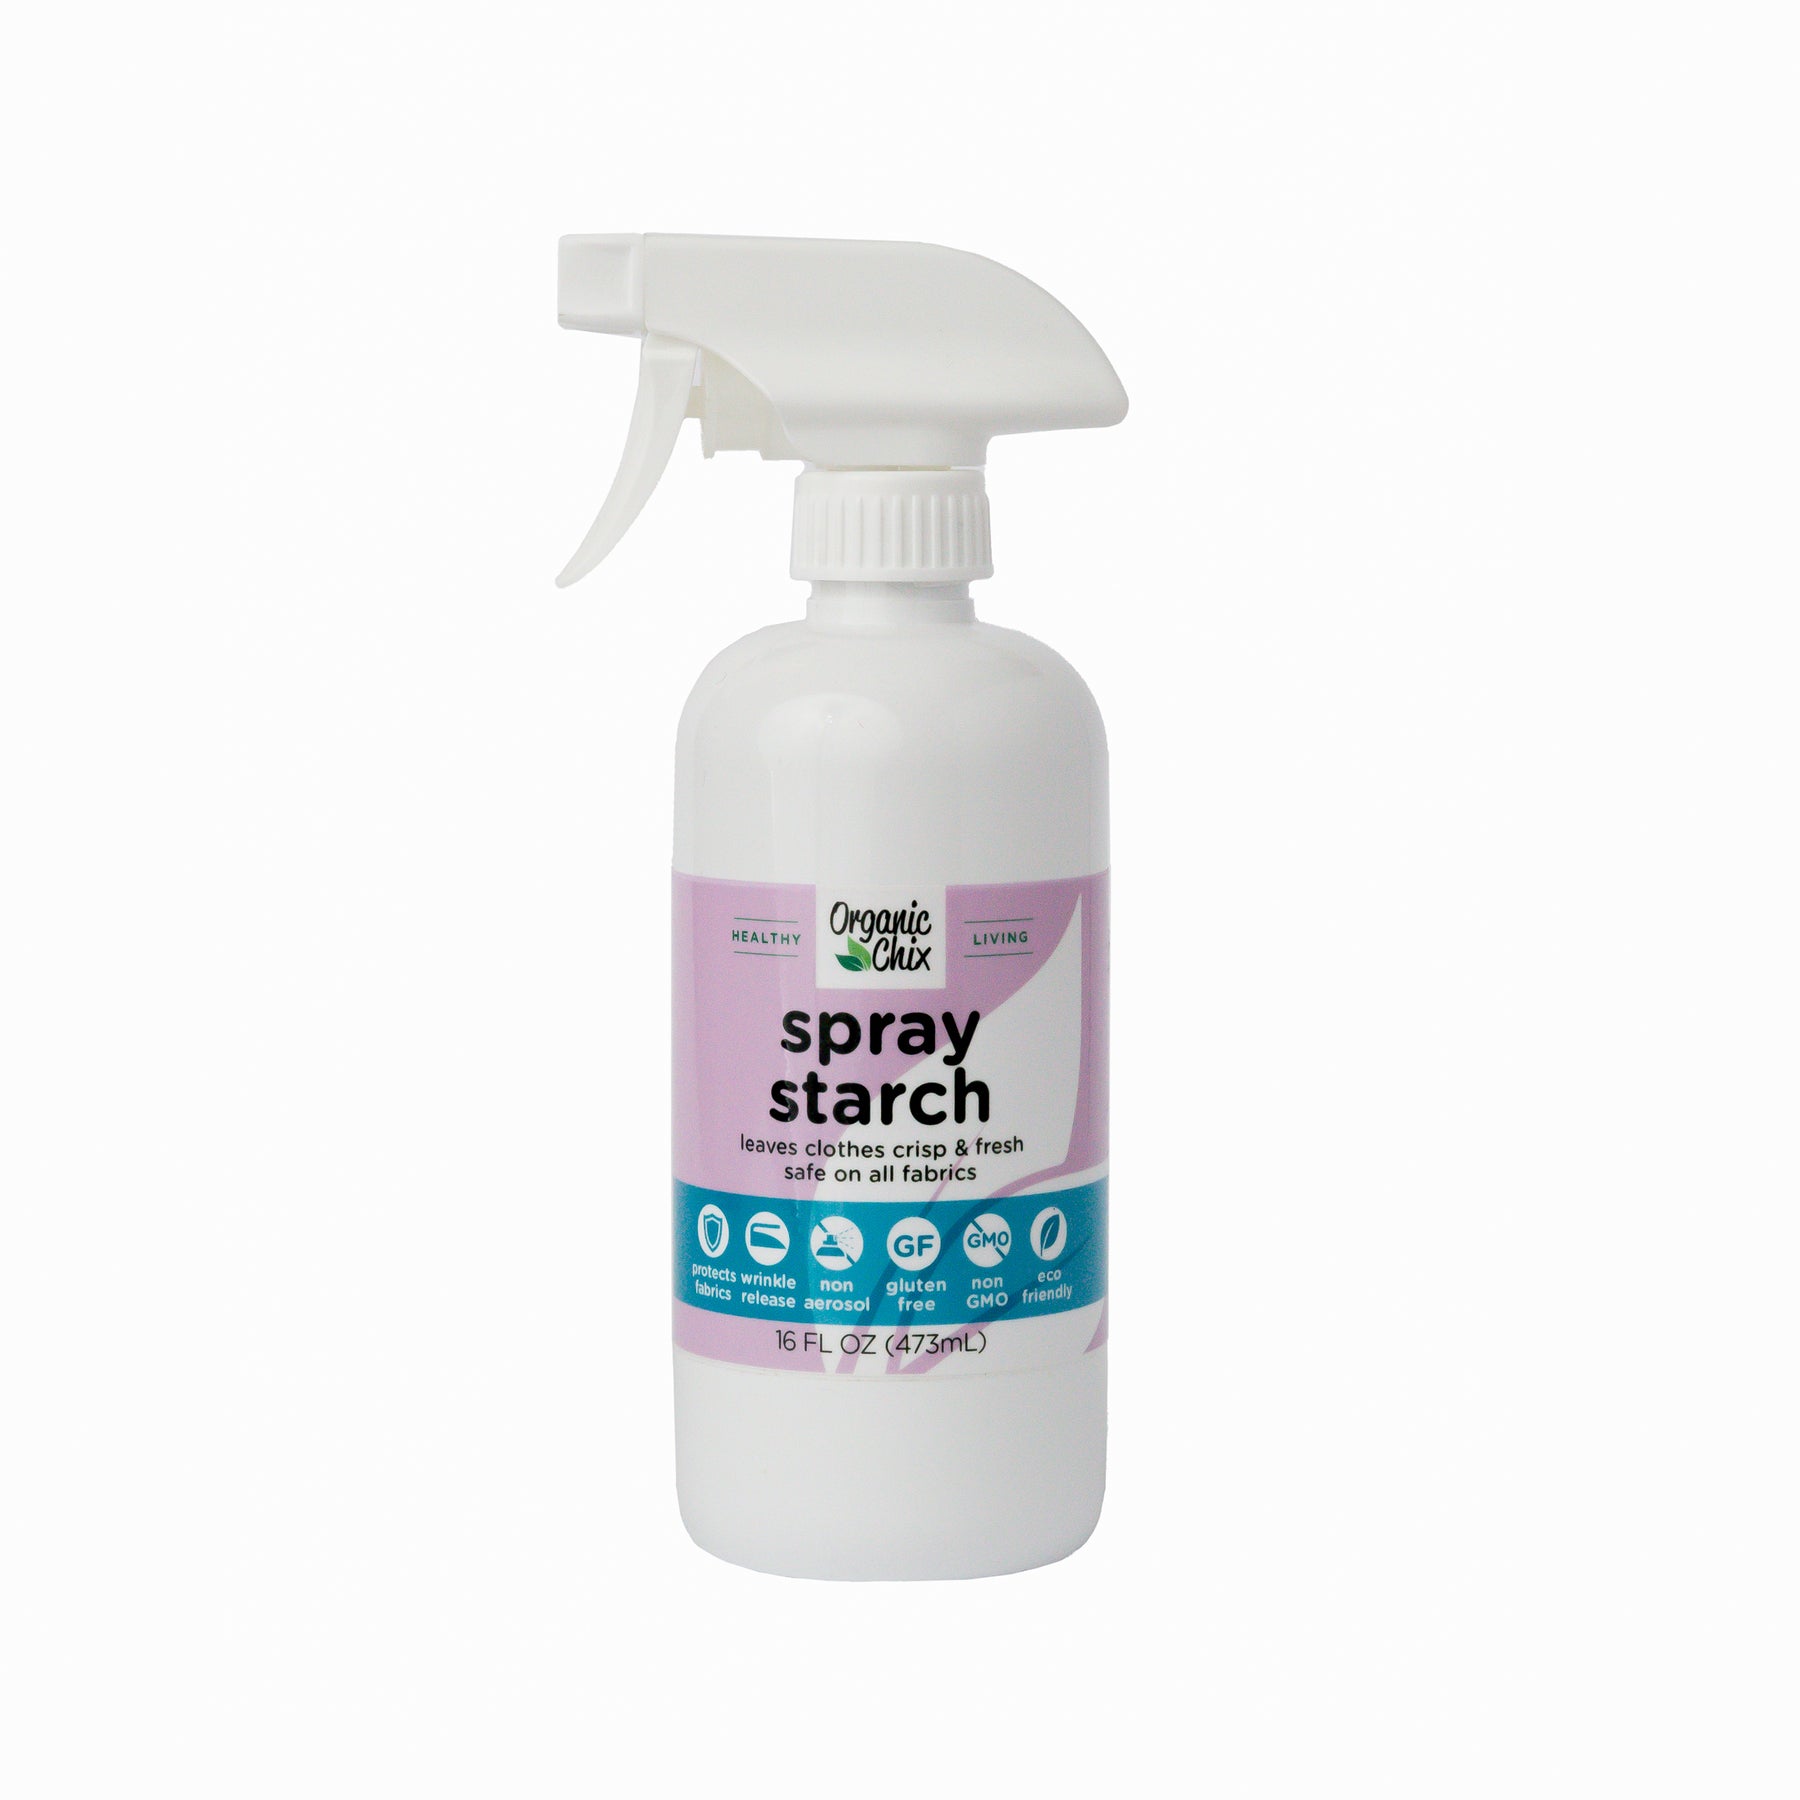 Niagara Ironing Fabric Free-Starch Spray Formula - China Fabric Starch  Spray and Niagara Starch price